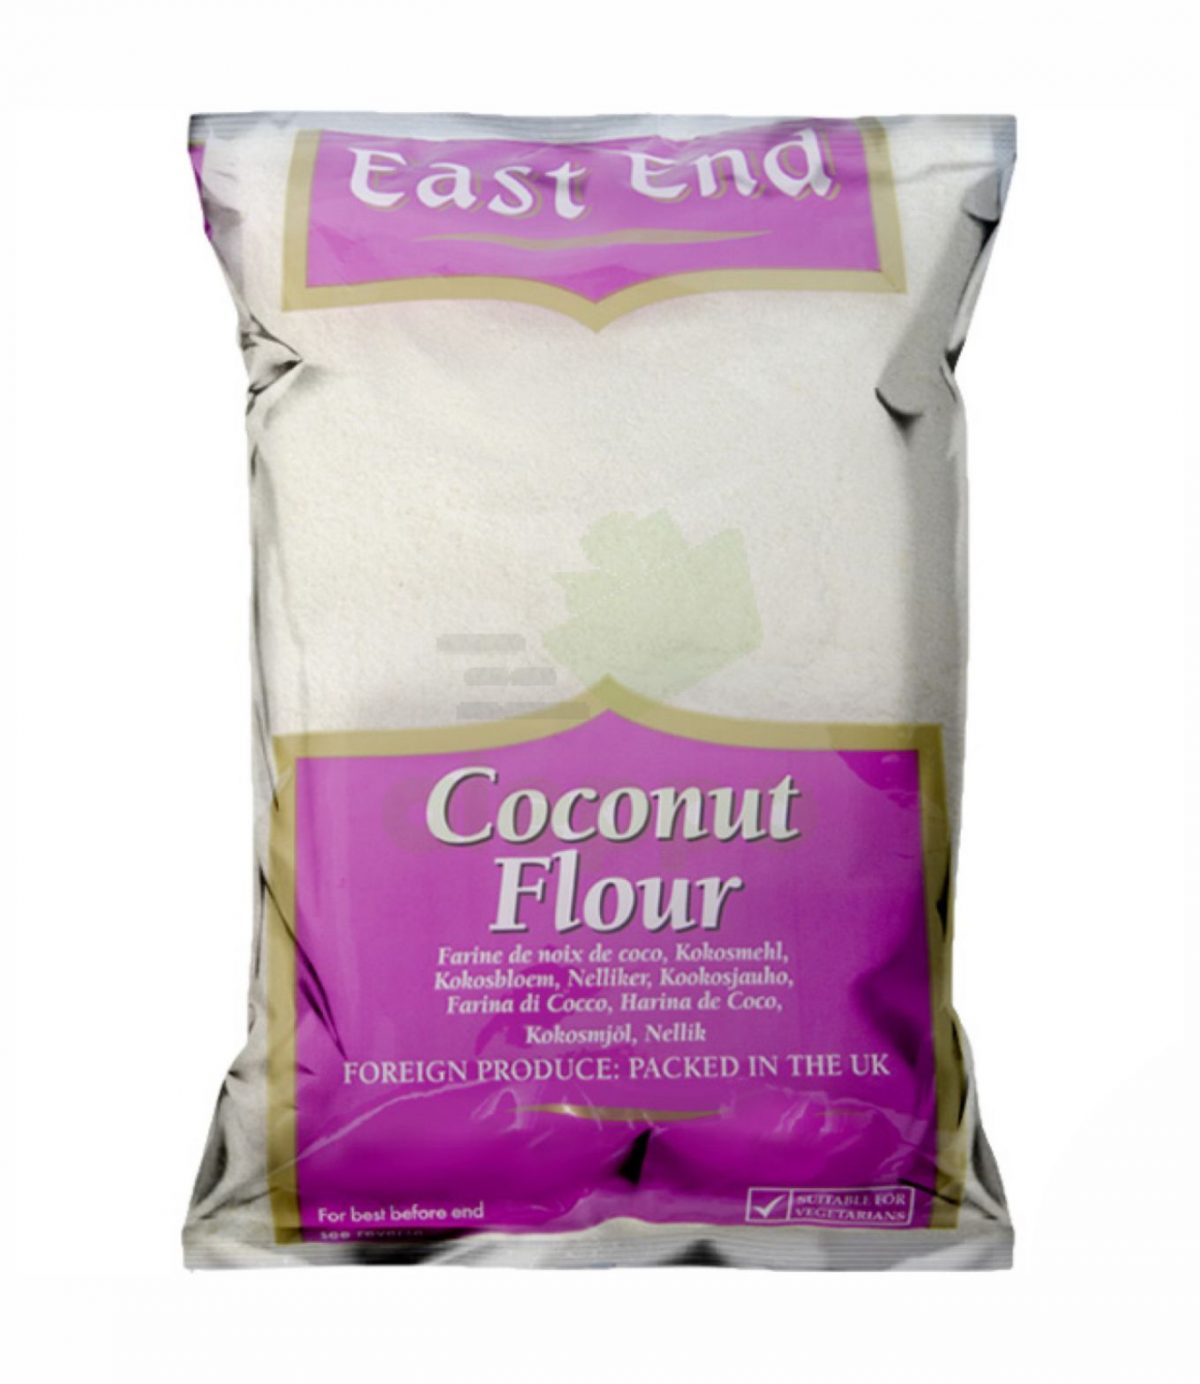 East End Coconut Flour 800g